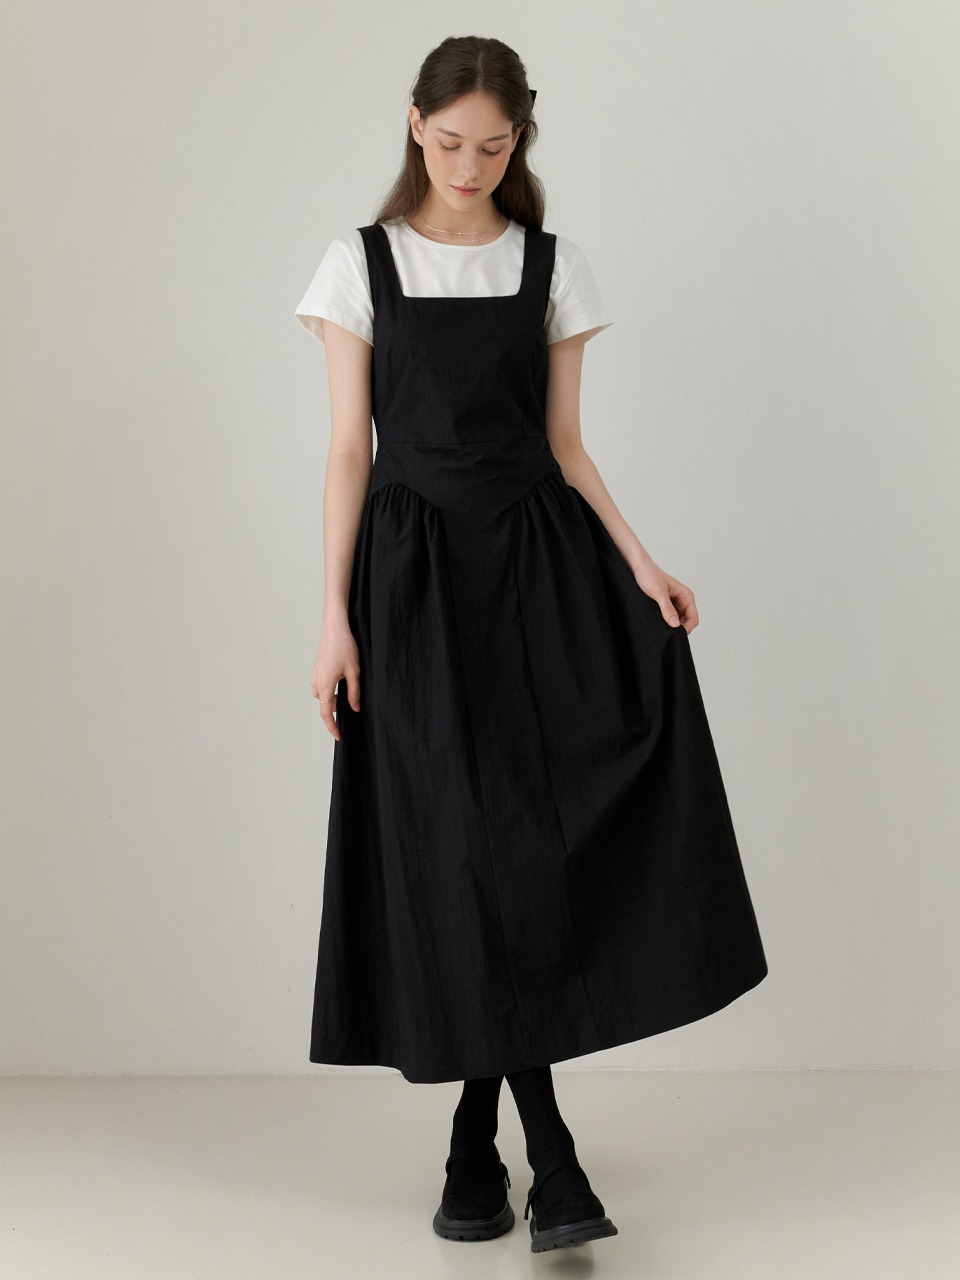 Tutu sleeveless dress (black)